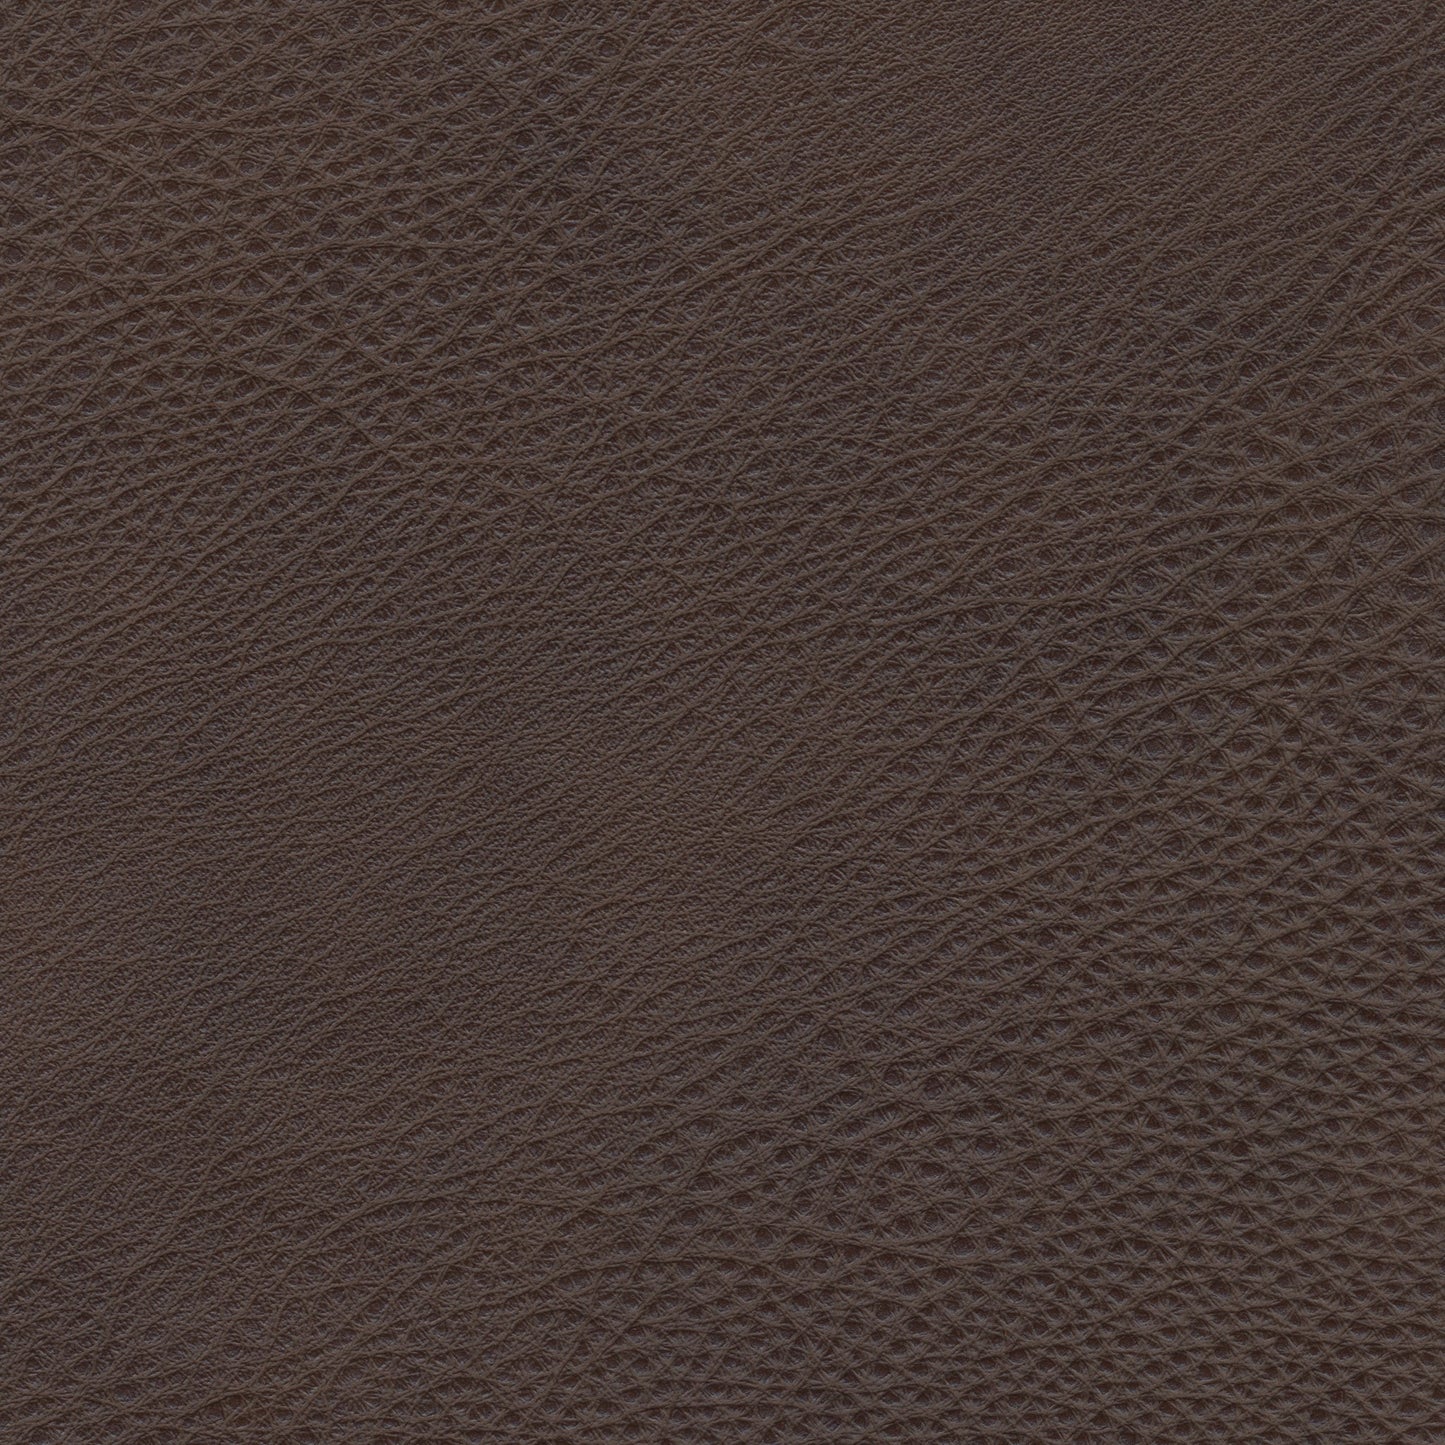 Weston Fudge Leather